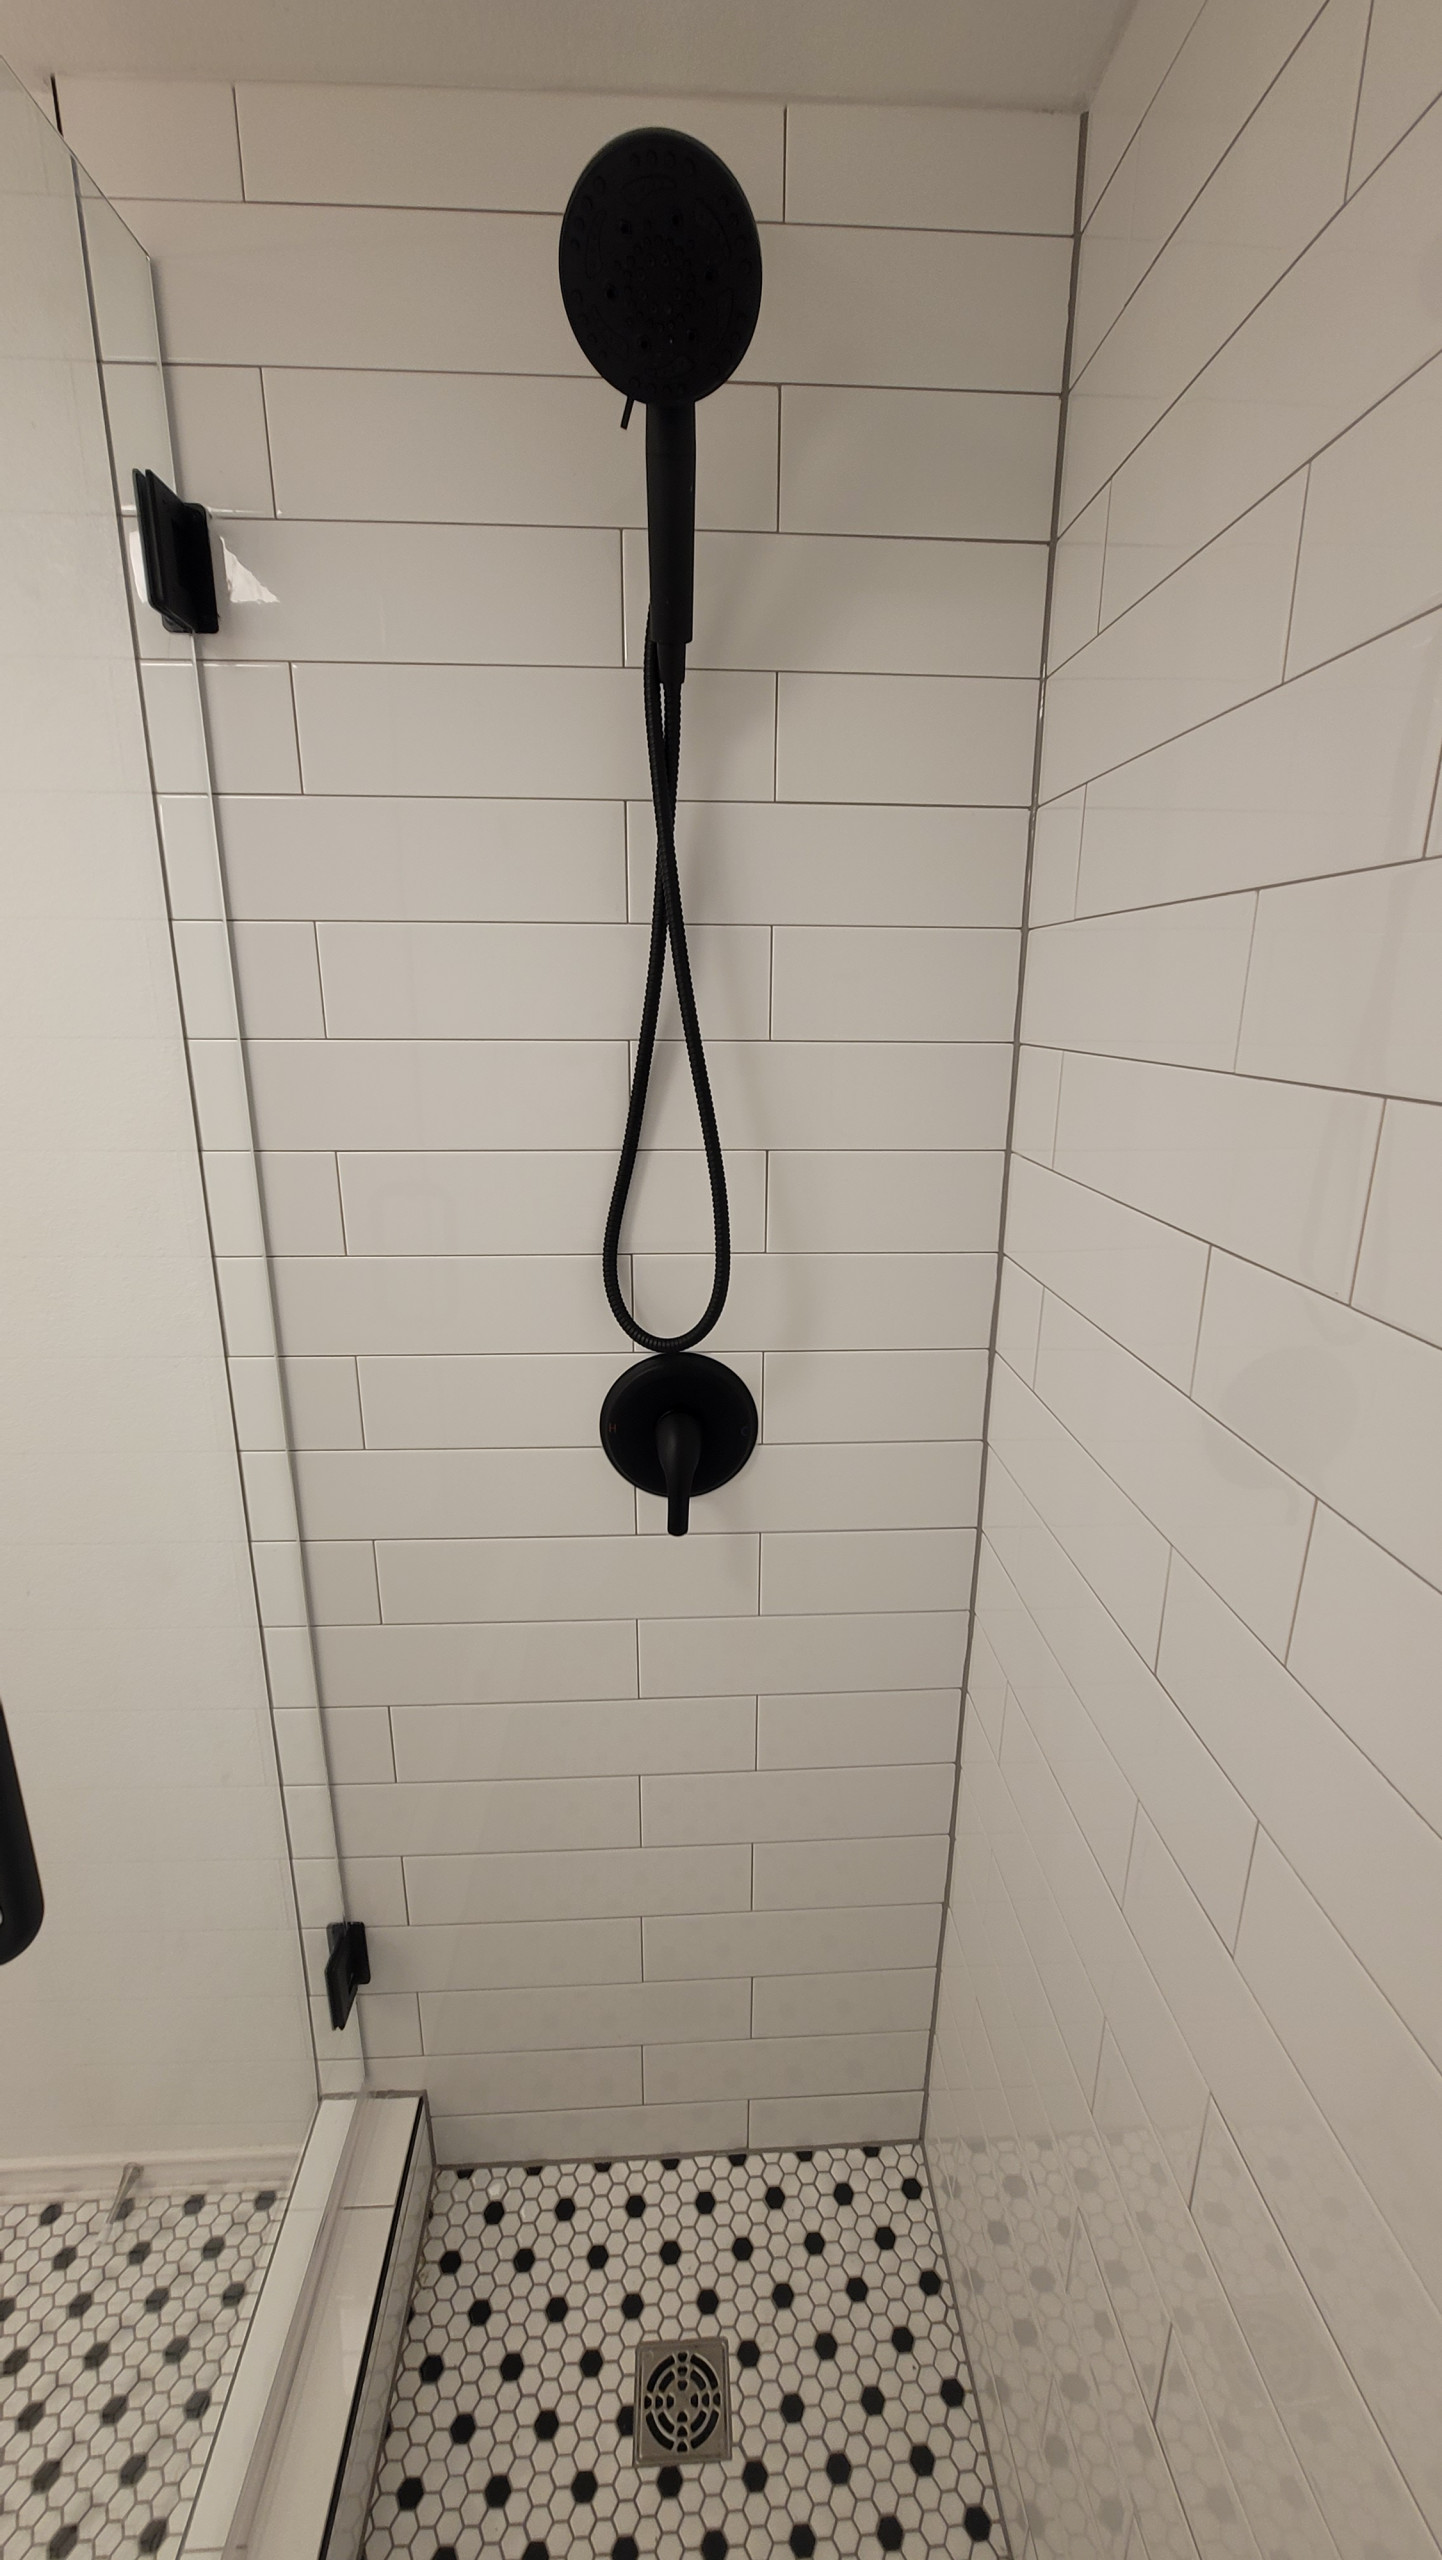 Plummettaz  Dbl Bathroom Remodel